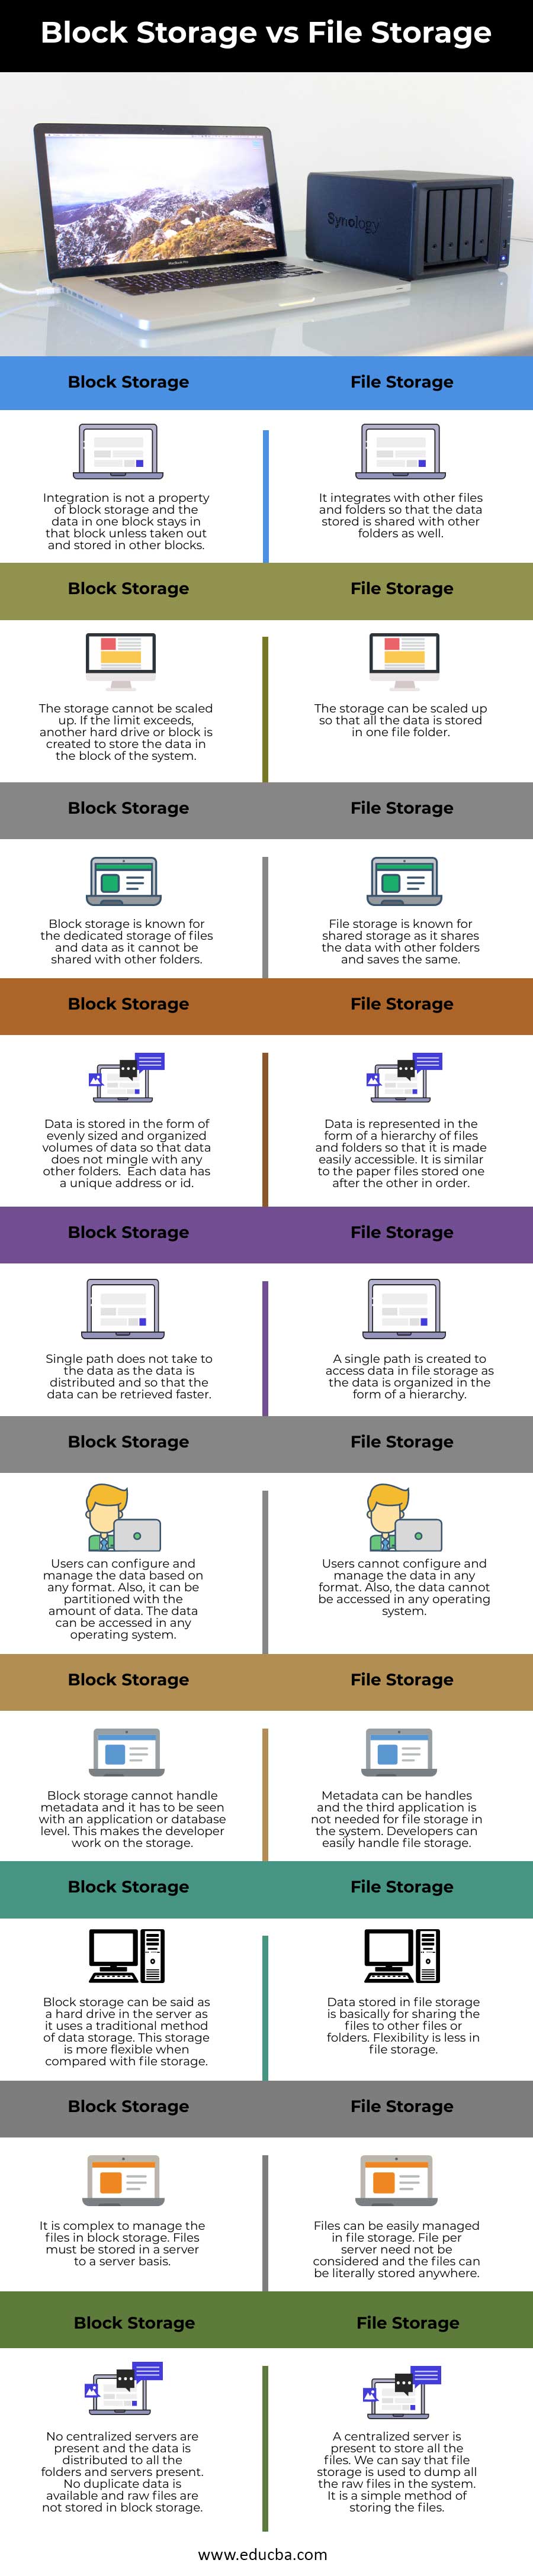 Block-Storage-vs-File-Storage-info